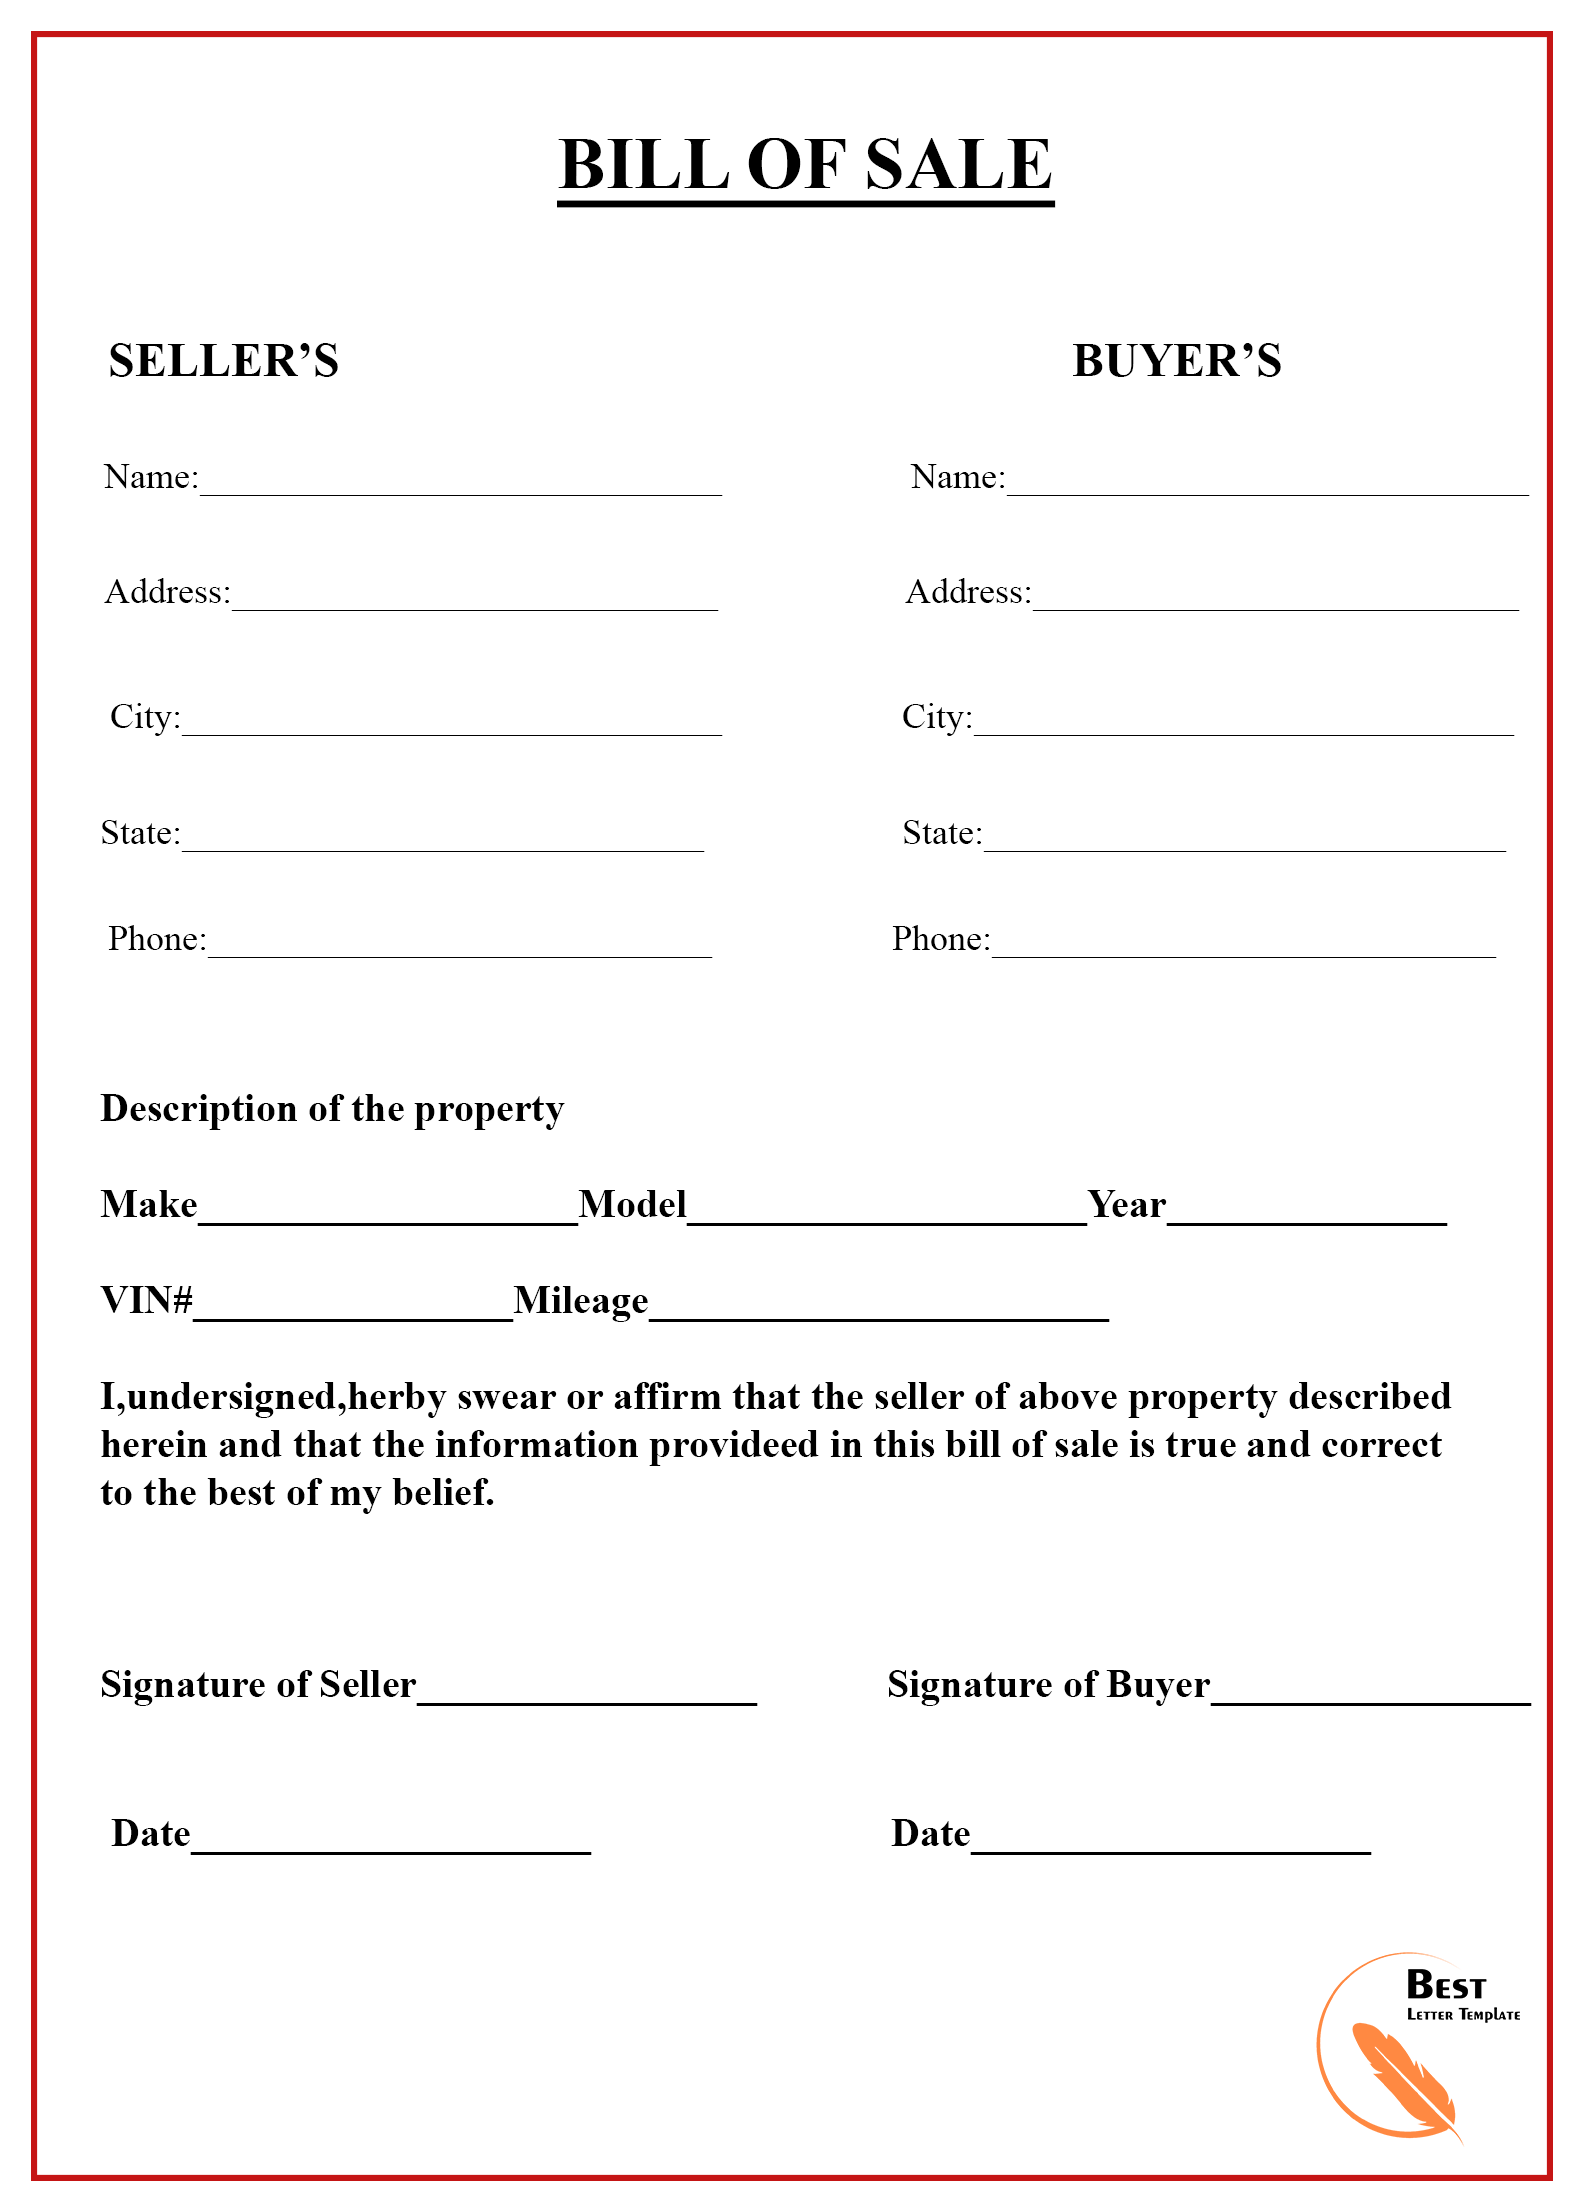 South Carolina Bill of Sale Form for DMV, Car, Boat